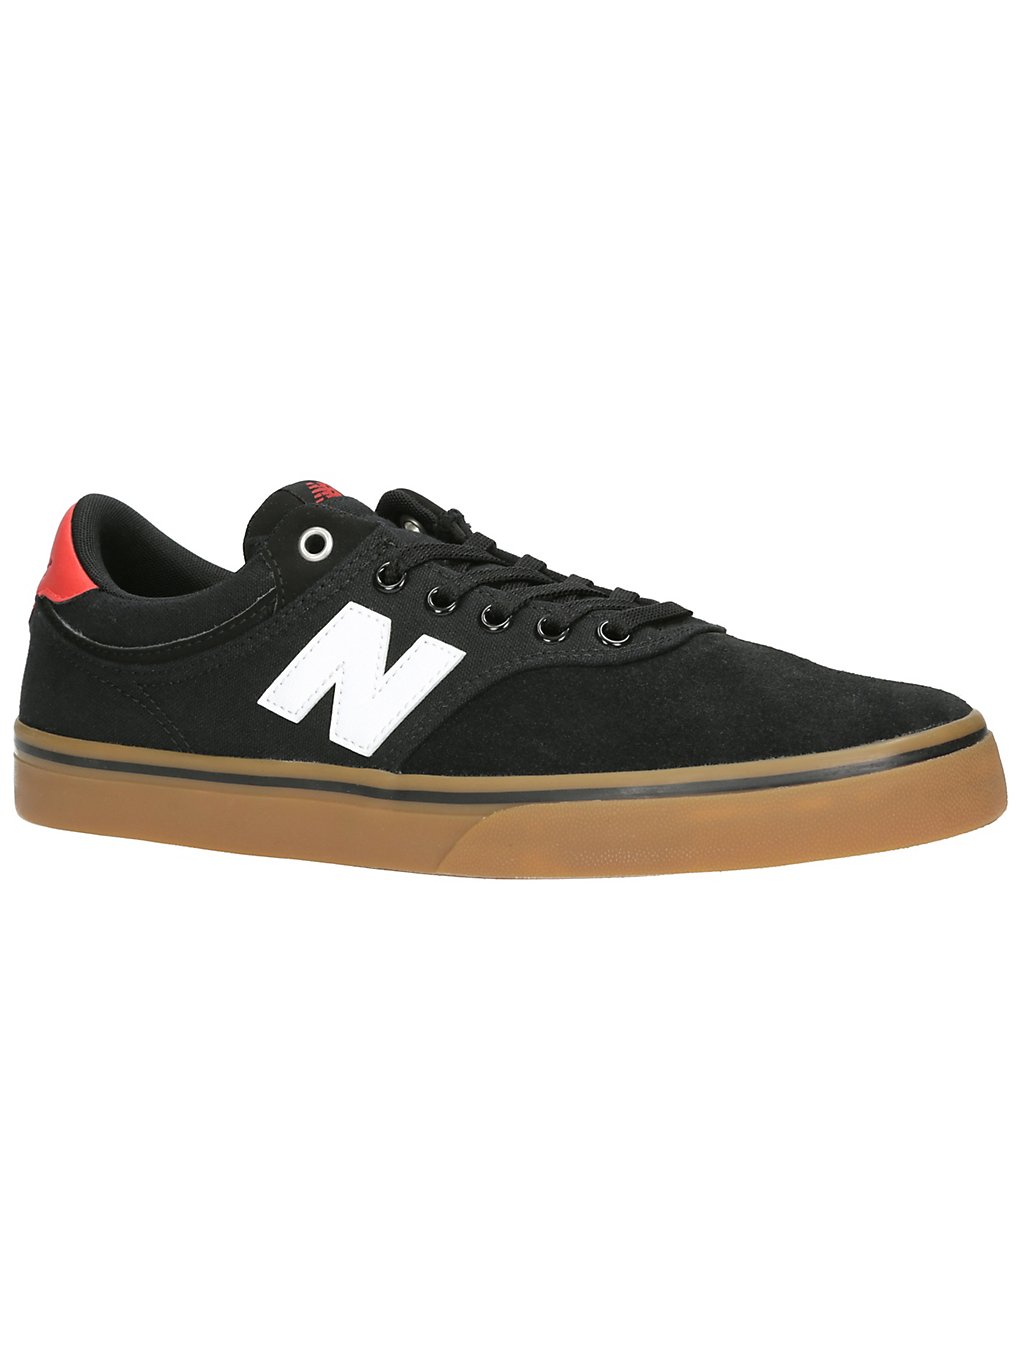 New Balance Numeric NM255 Skate Shoes white